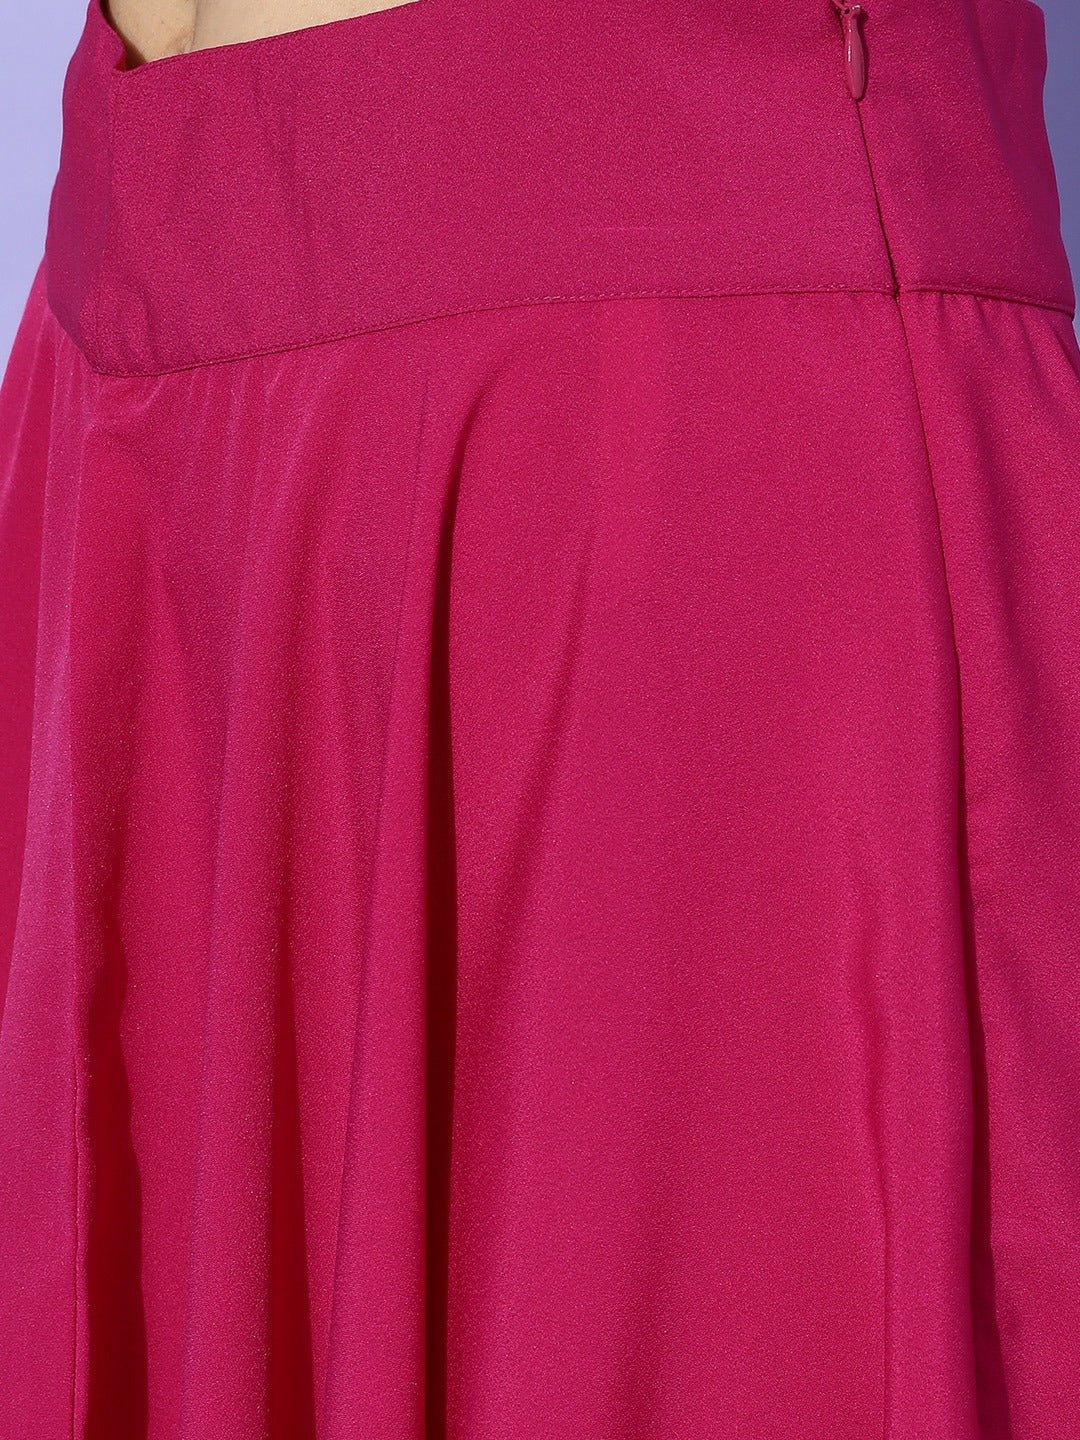 Folk Republic Women Solid Pink Flared A-Line Midi Skirt - #folk republic#